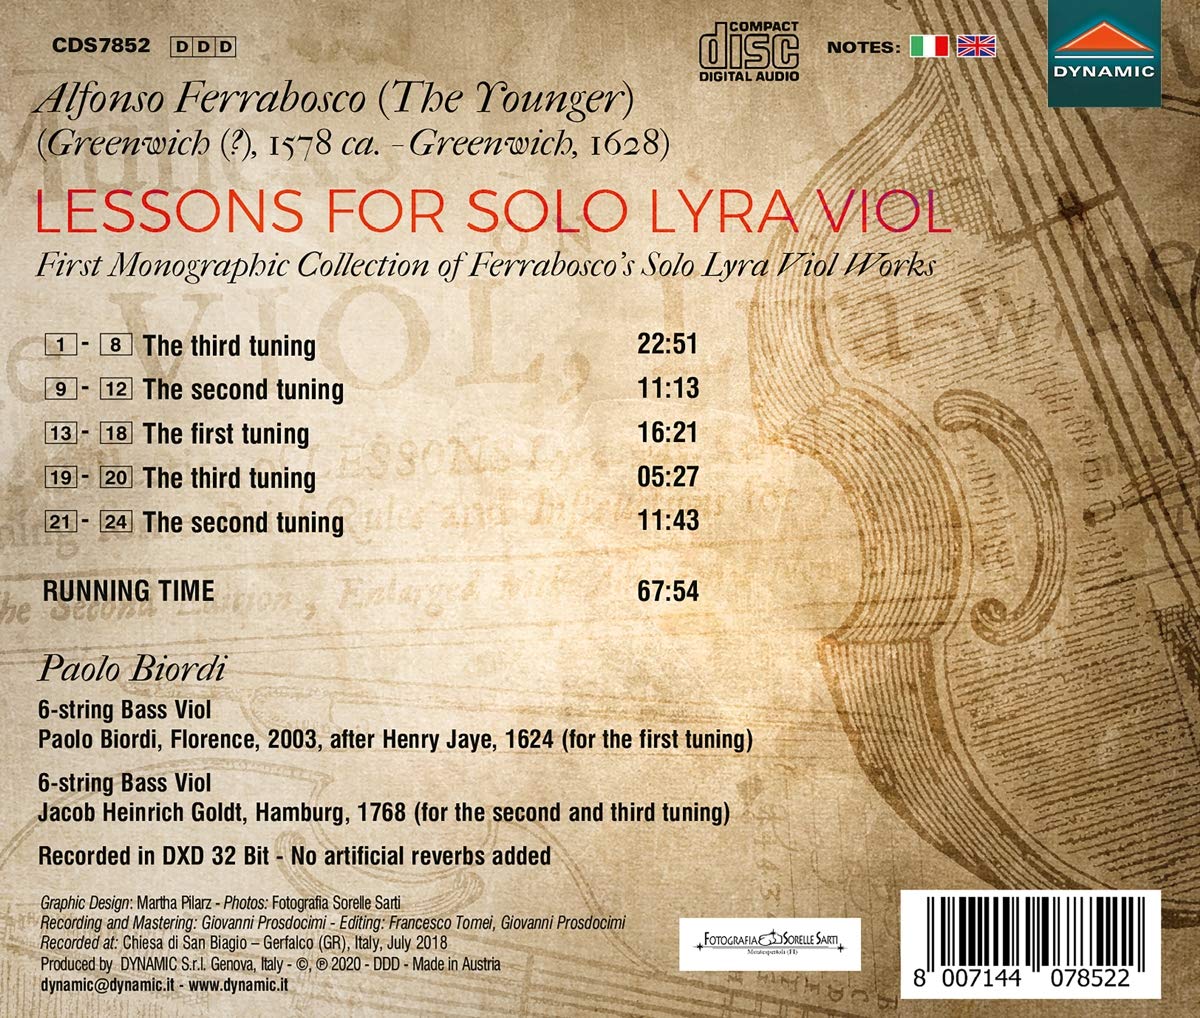 Paolo Biordi 알폰소 페라보스코 2세: 독주 리라 비올을 위한 교습서 (Alfonso Ferrabosco II: Lessons for solo lyra viol)